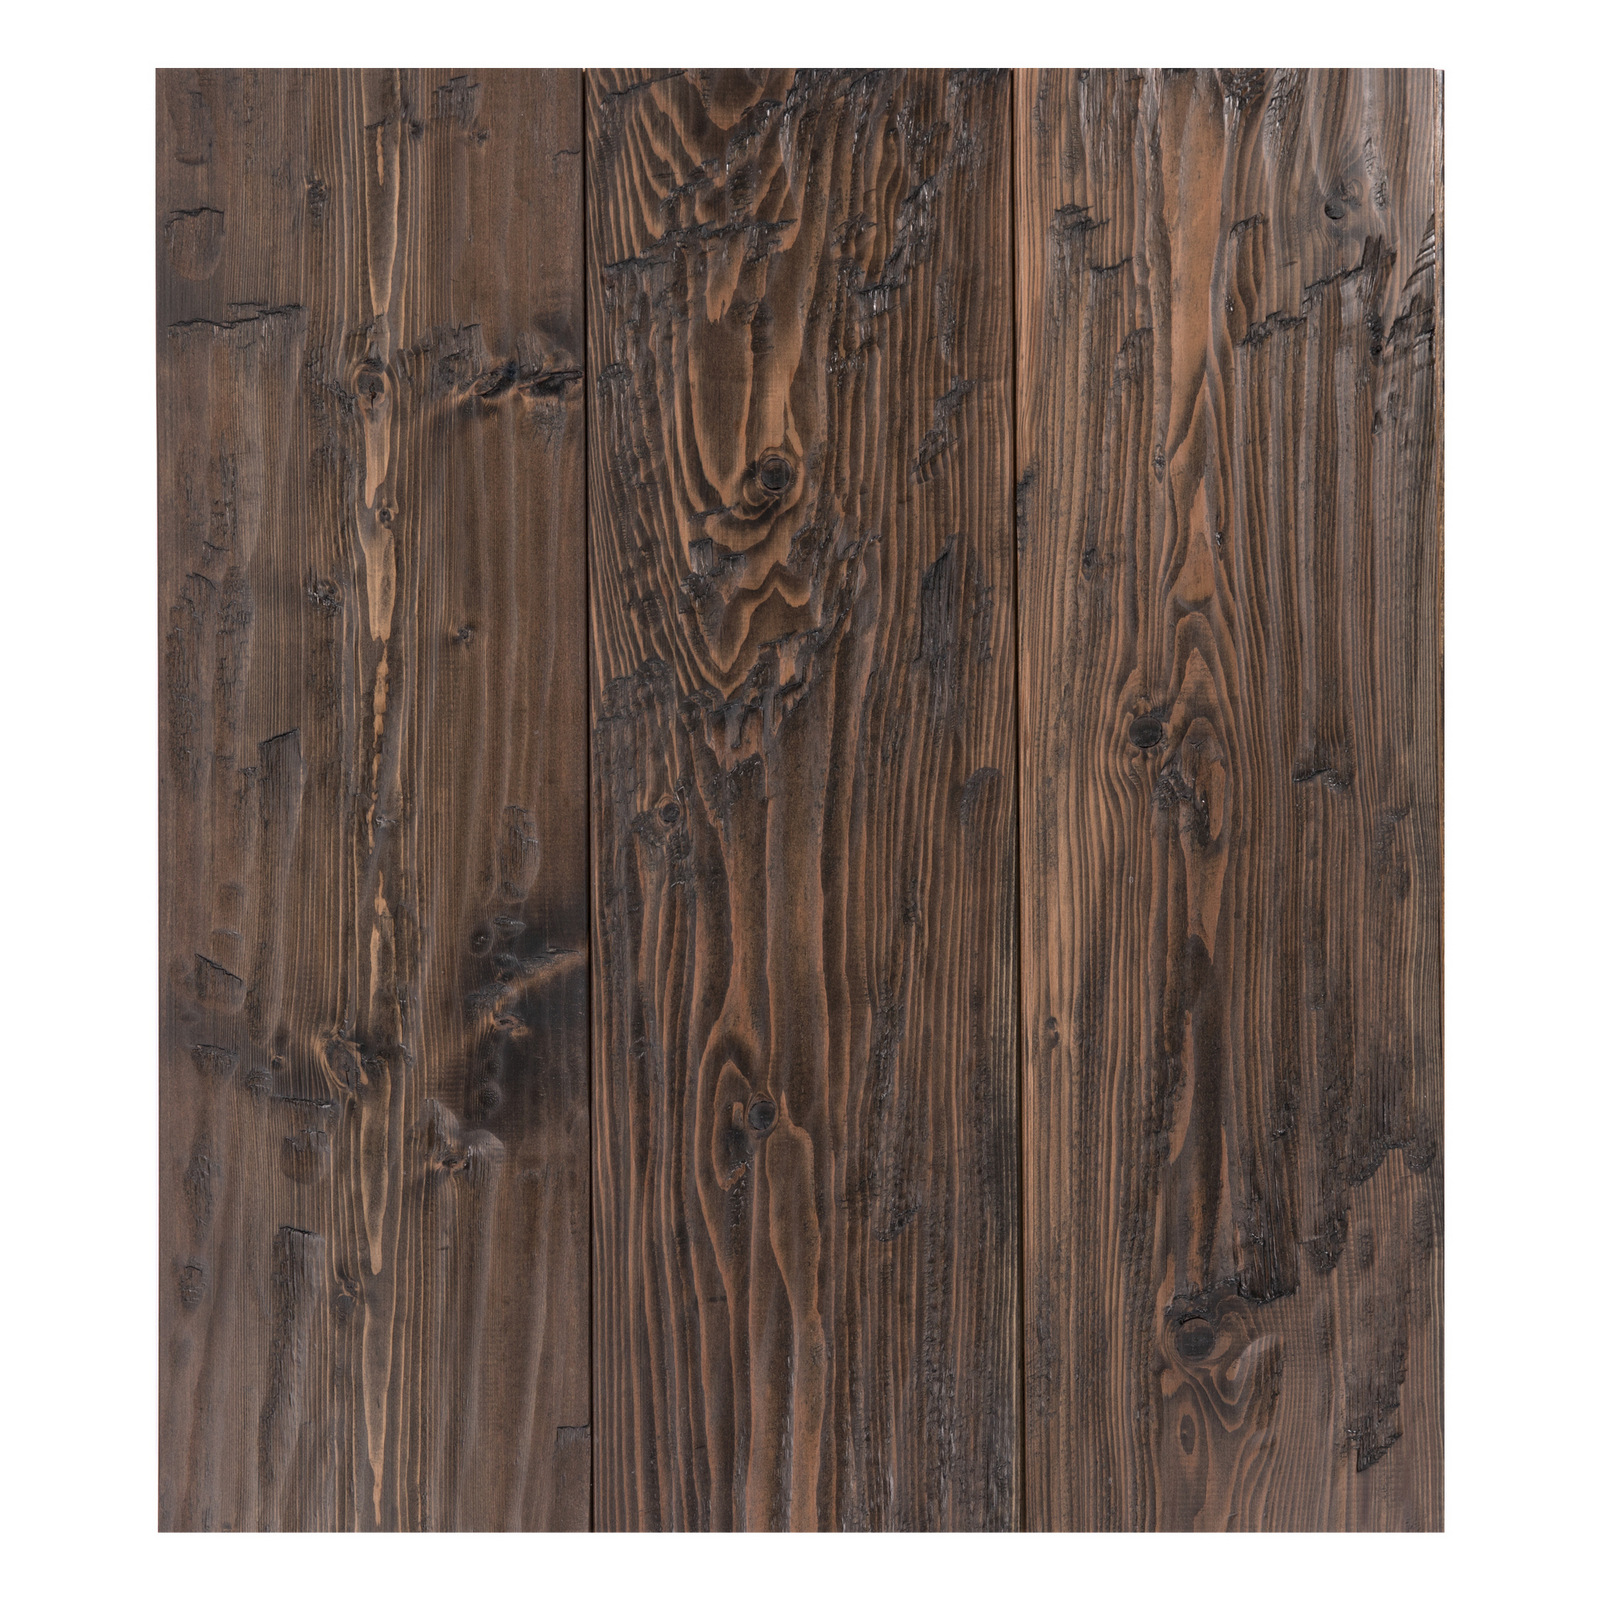 antique hand hewn wood flooring